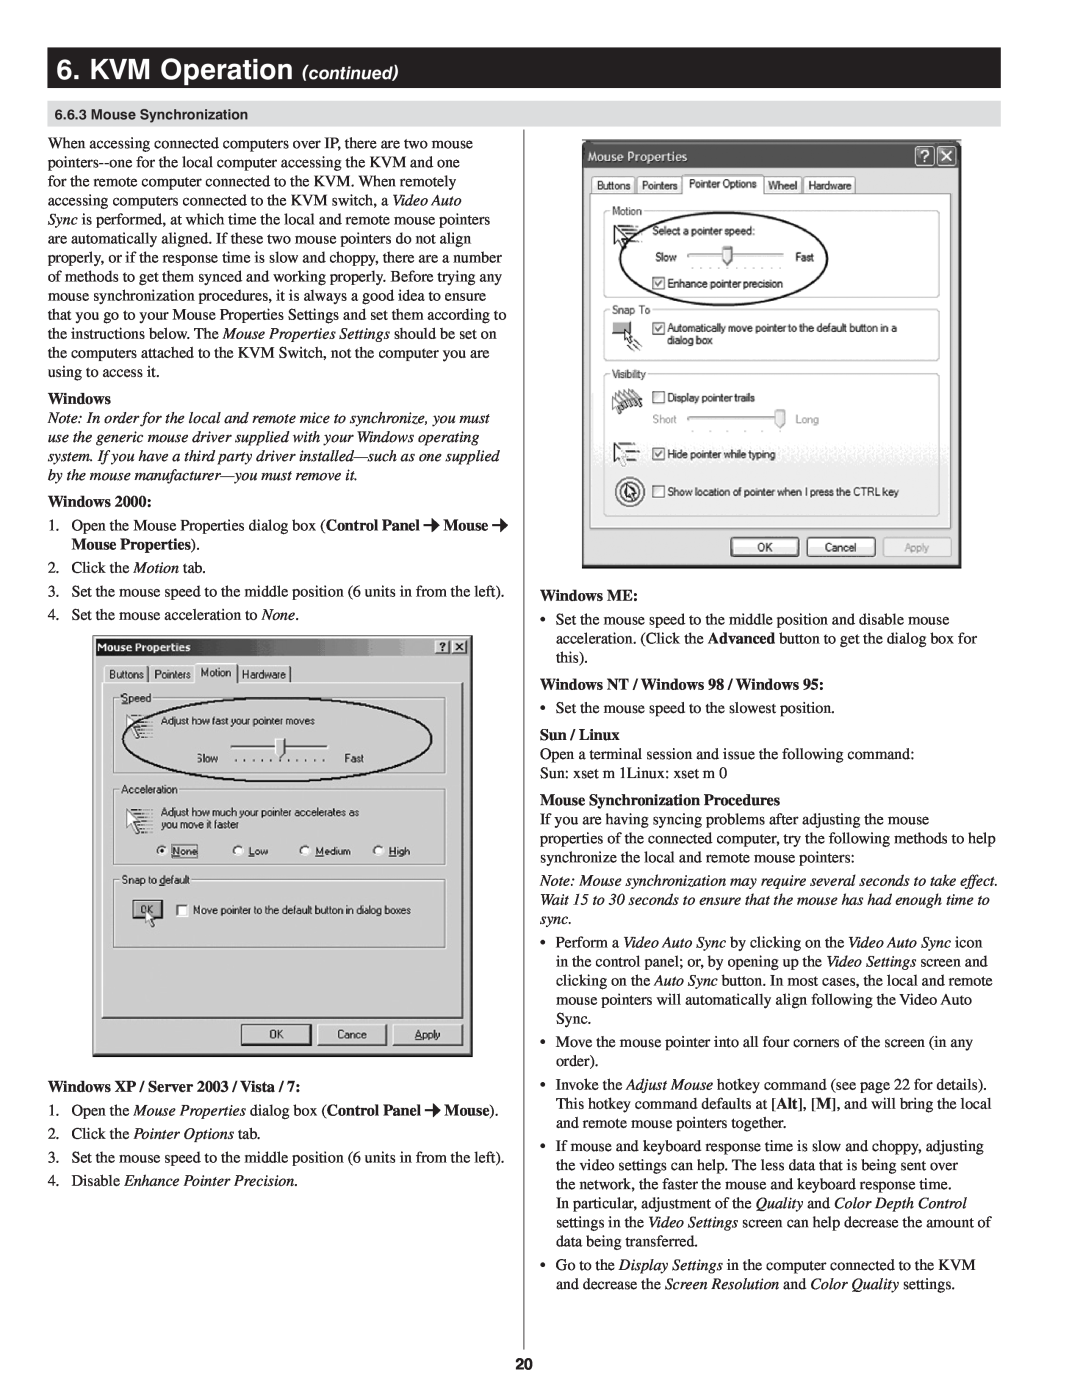 Tripp Lite B022-U08-IP Windows XP / Server 2003 / Vista, Click the Pointer Options tab, Windows ME, Sun / Linux 